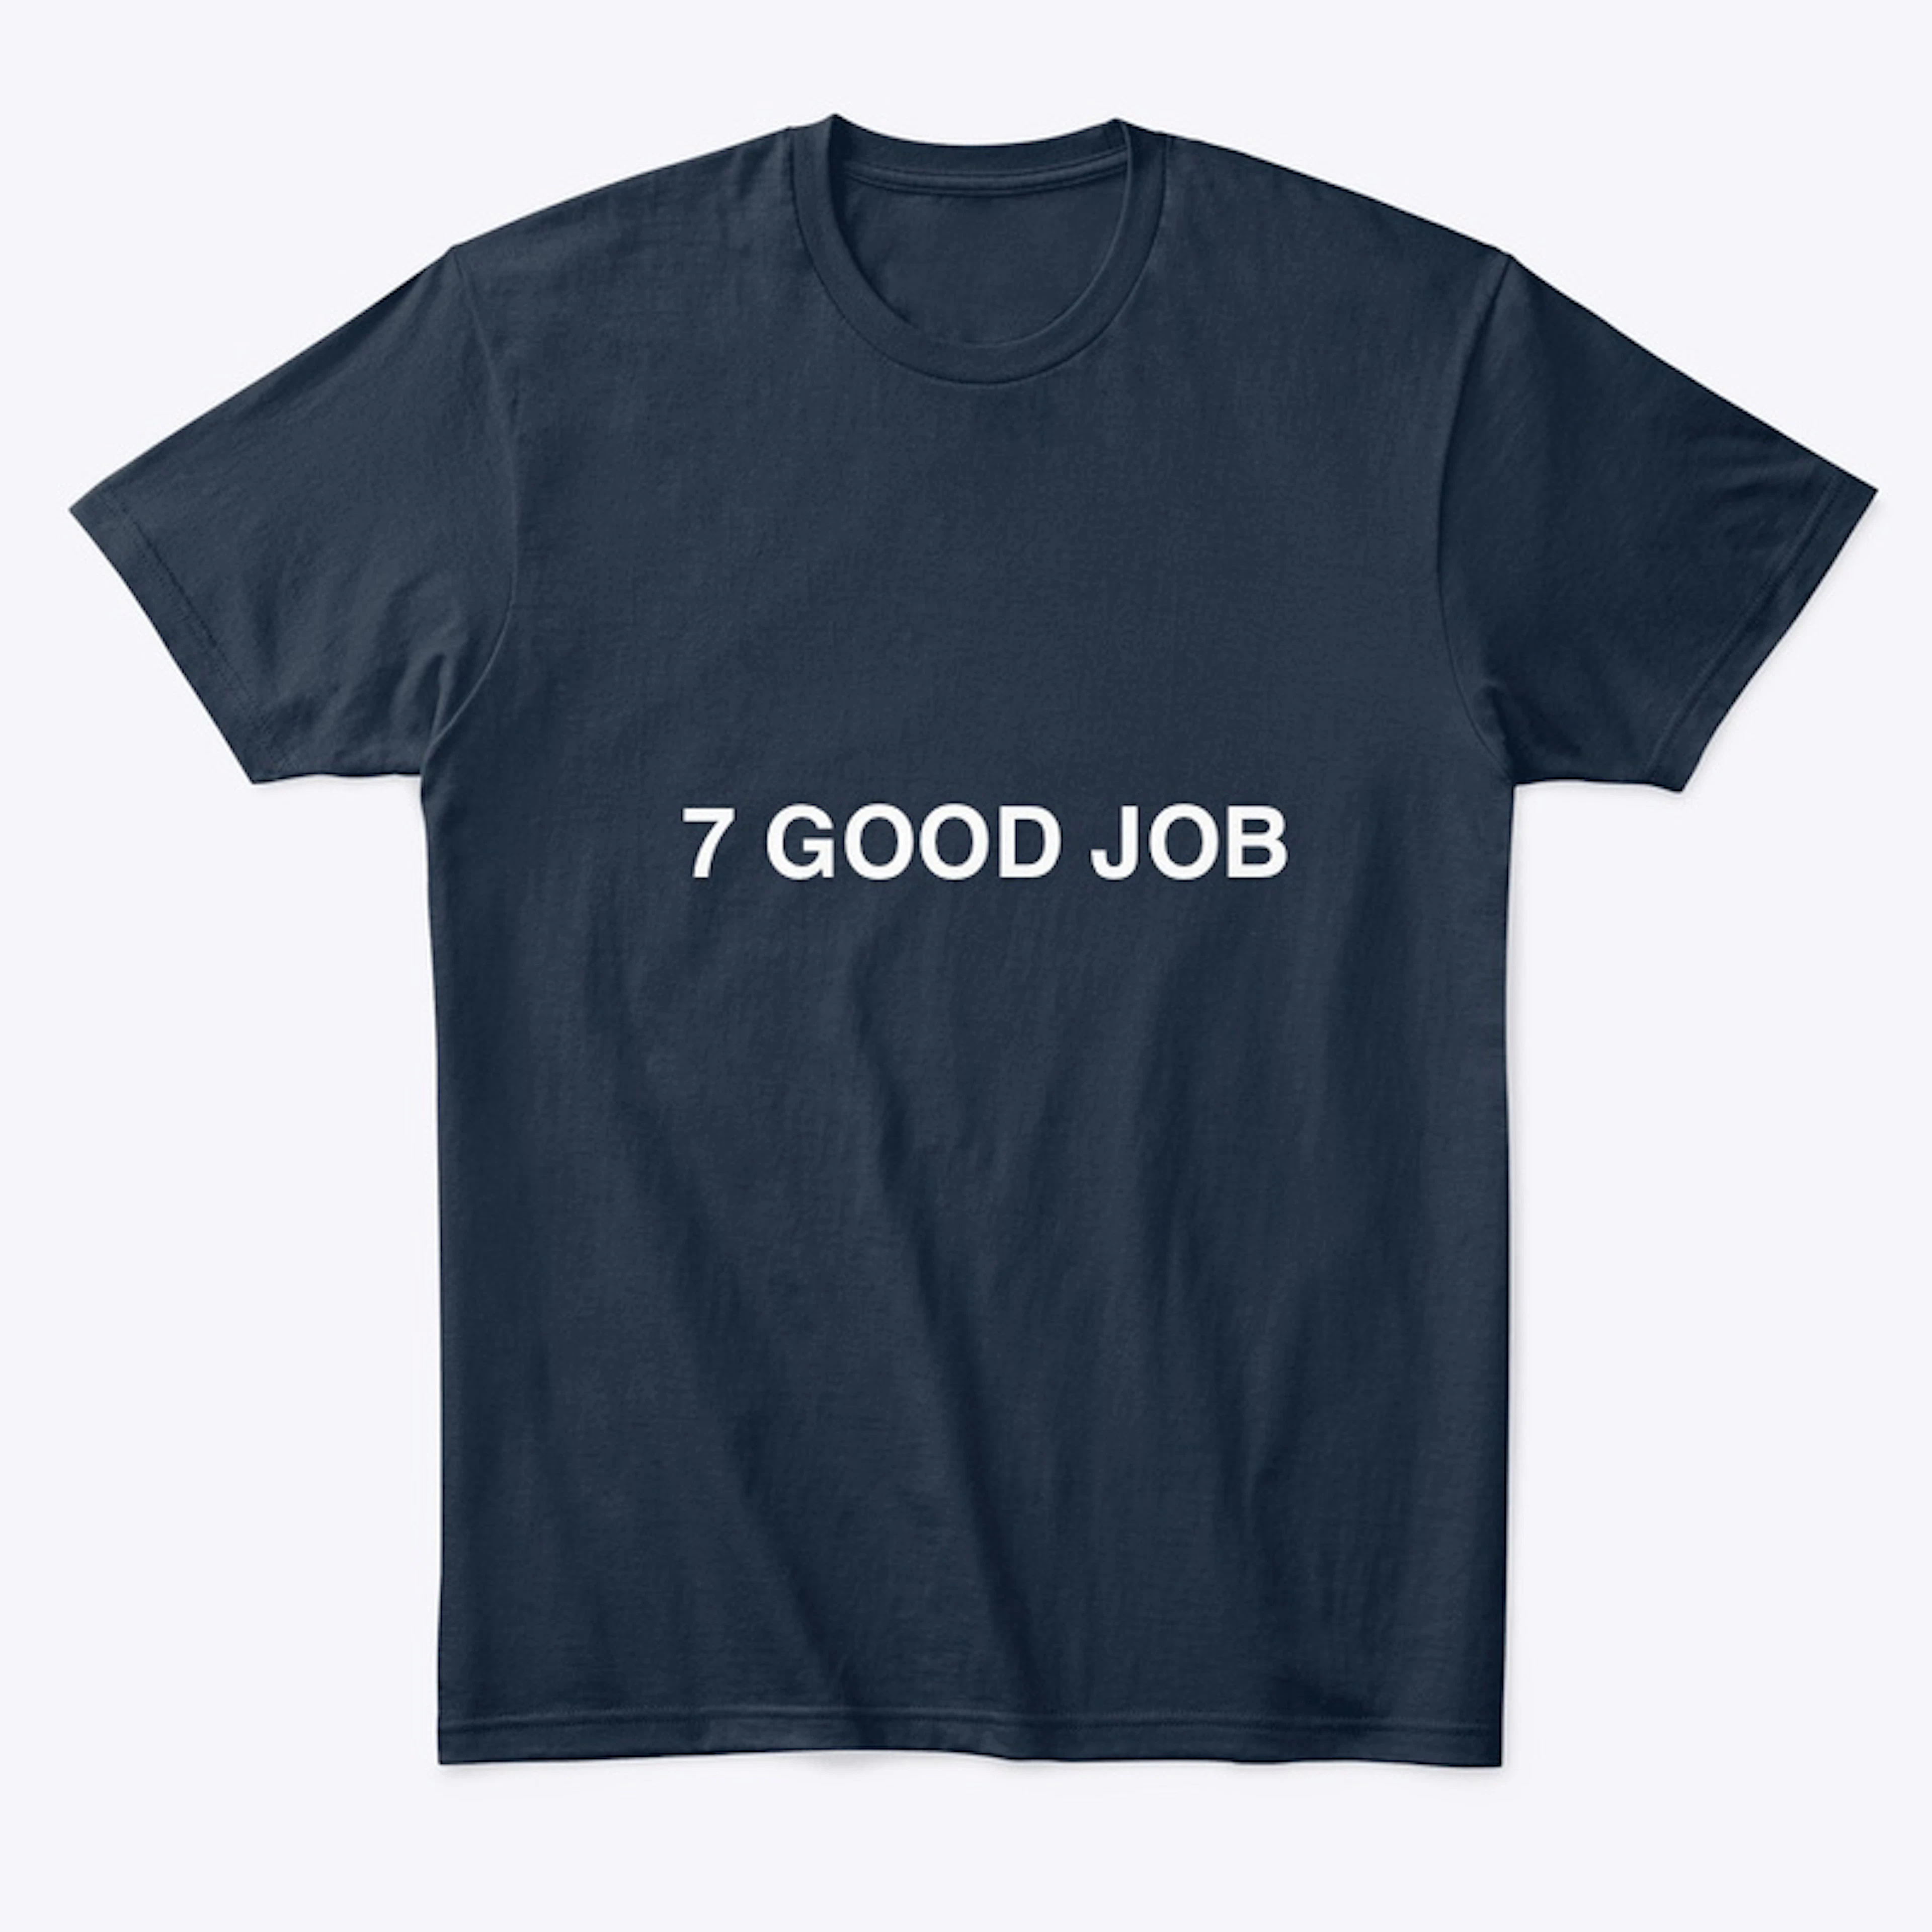  7 GOOD JOB